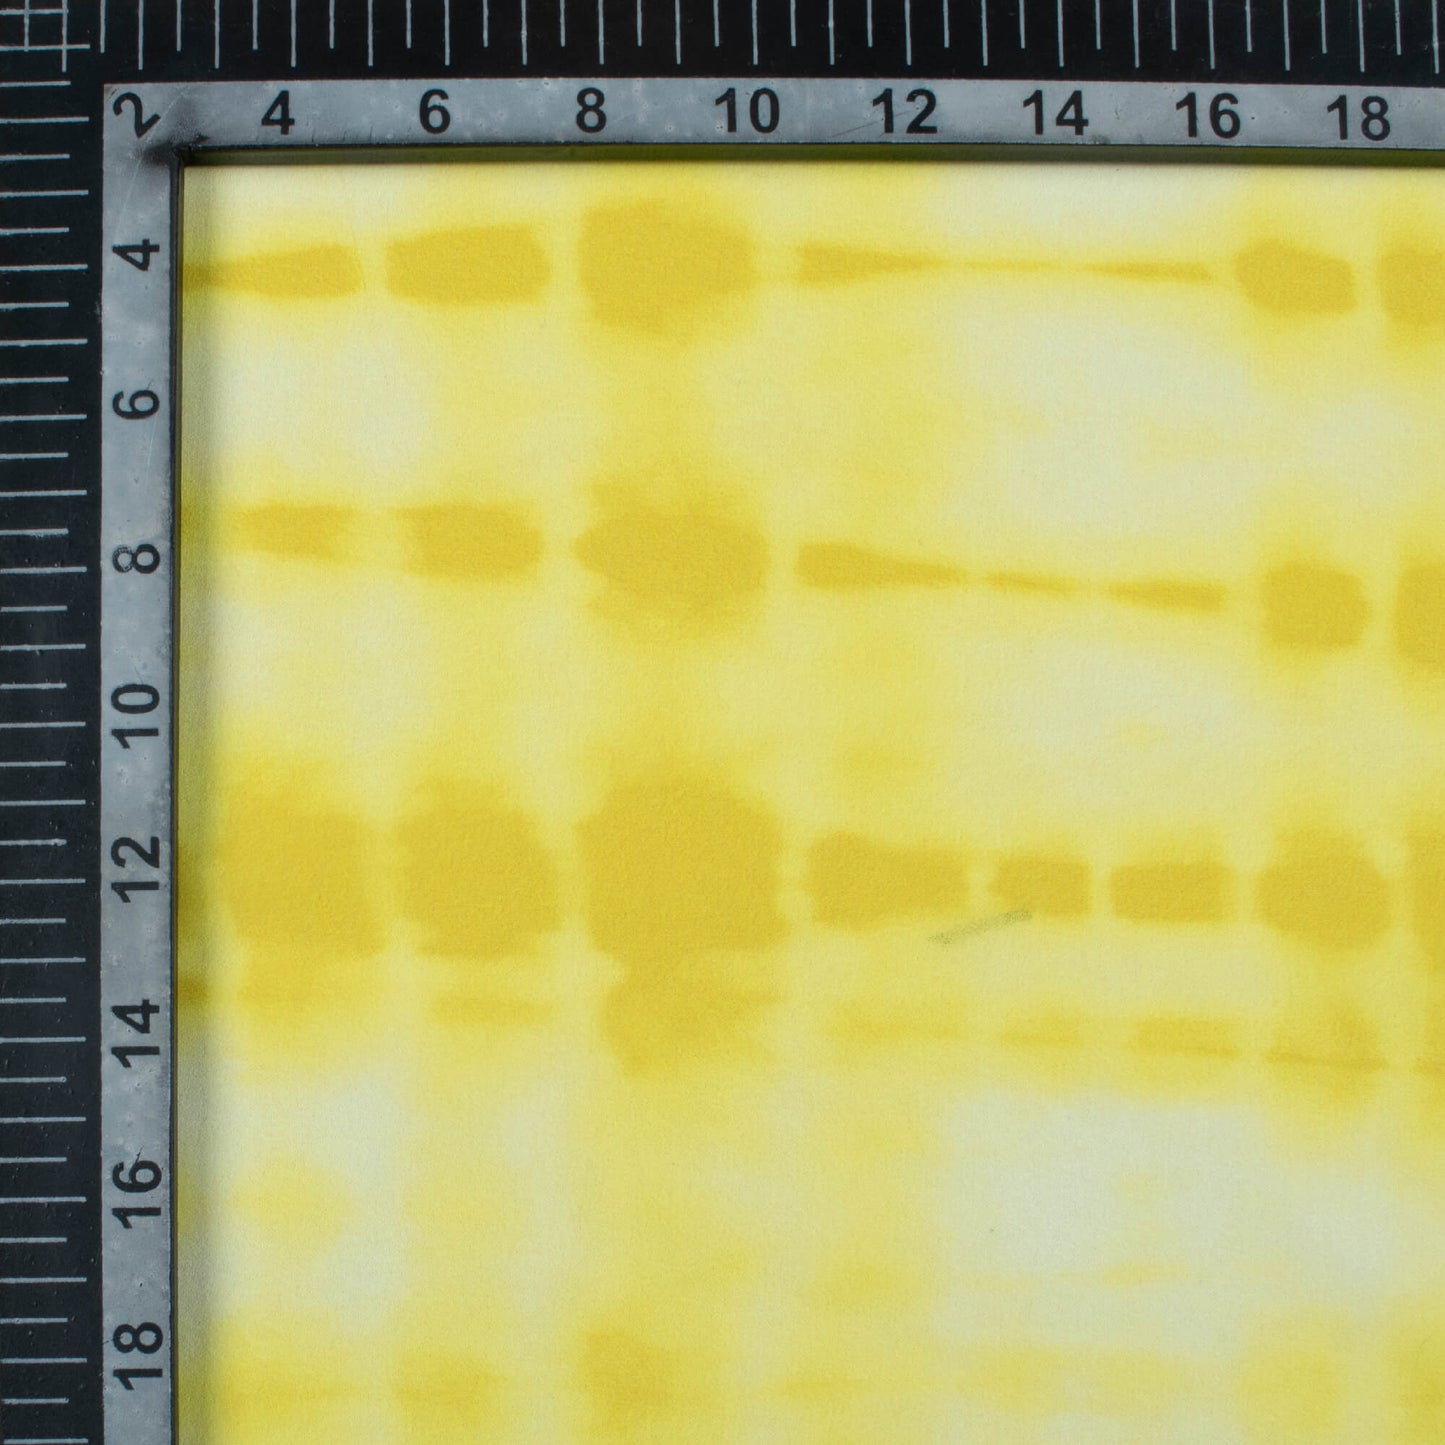 Yellow And White Shibori Pattern Digital Print Georgette Fabric